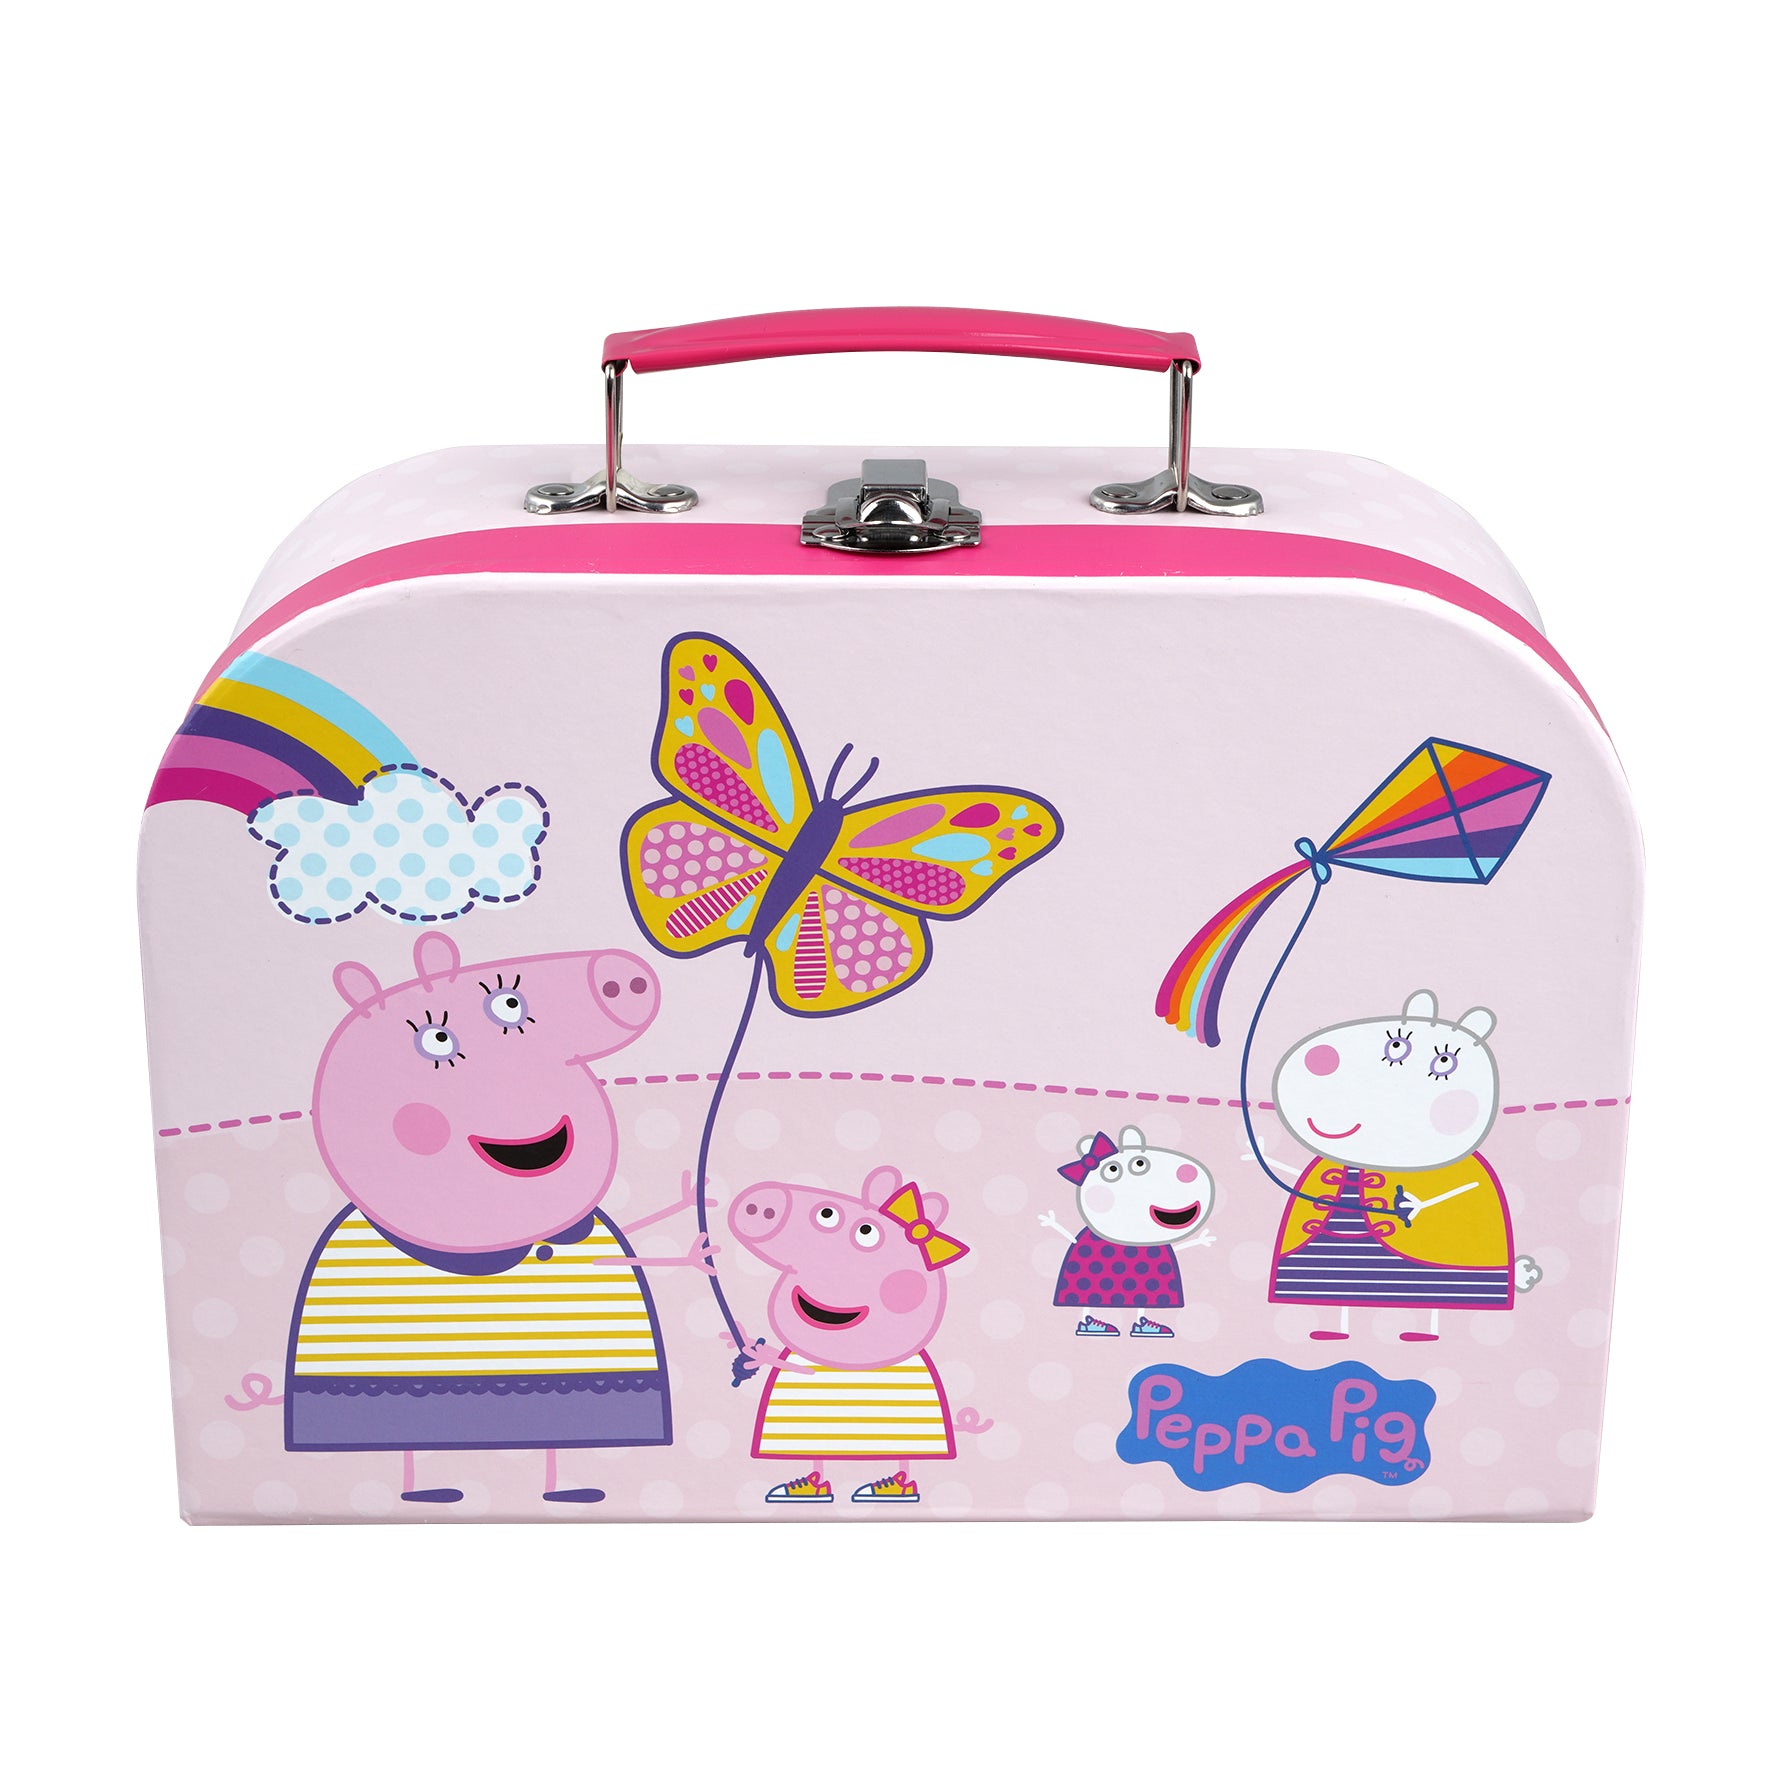 peppa pig 3 suitcases set